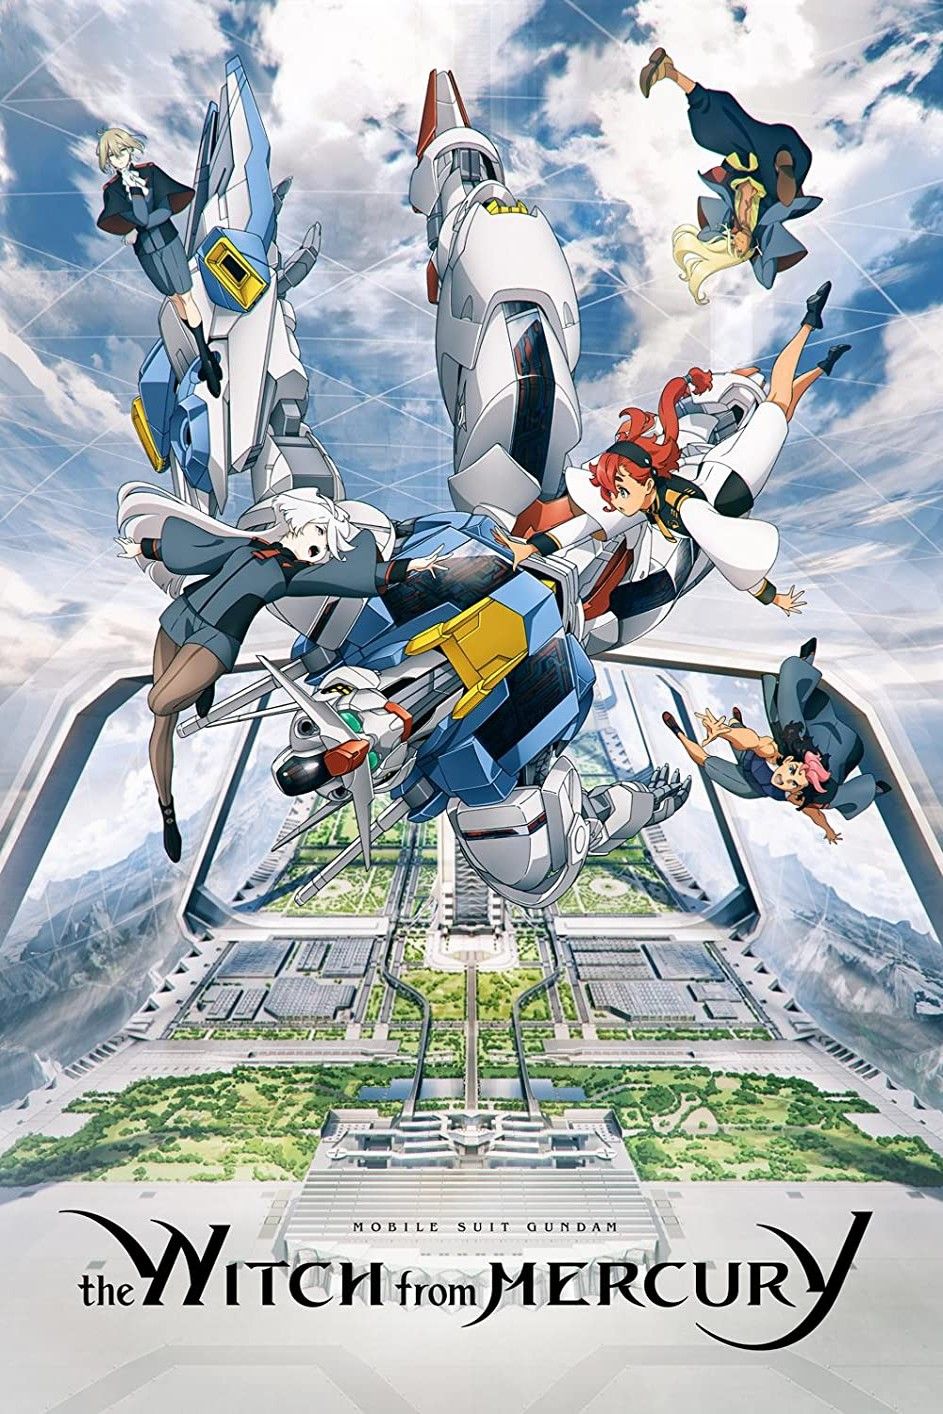 Gundam Witch from Mercury Poster